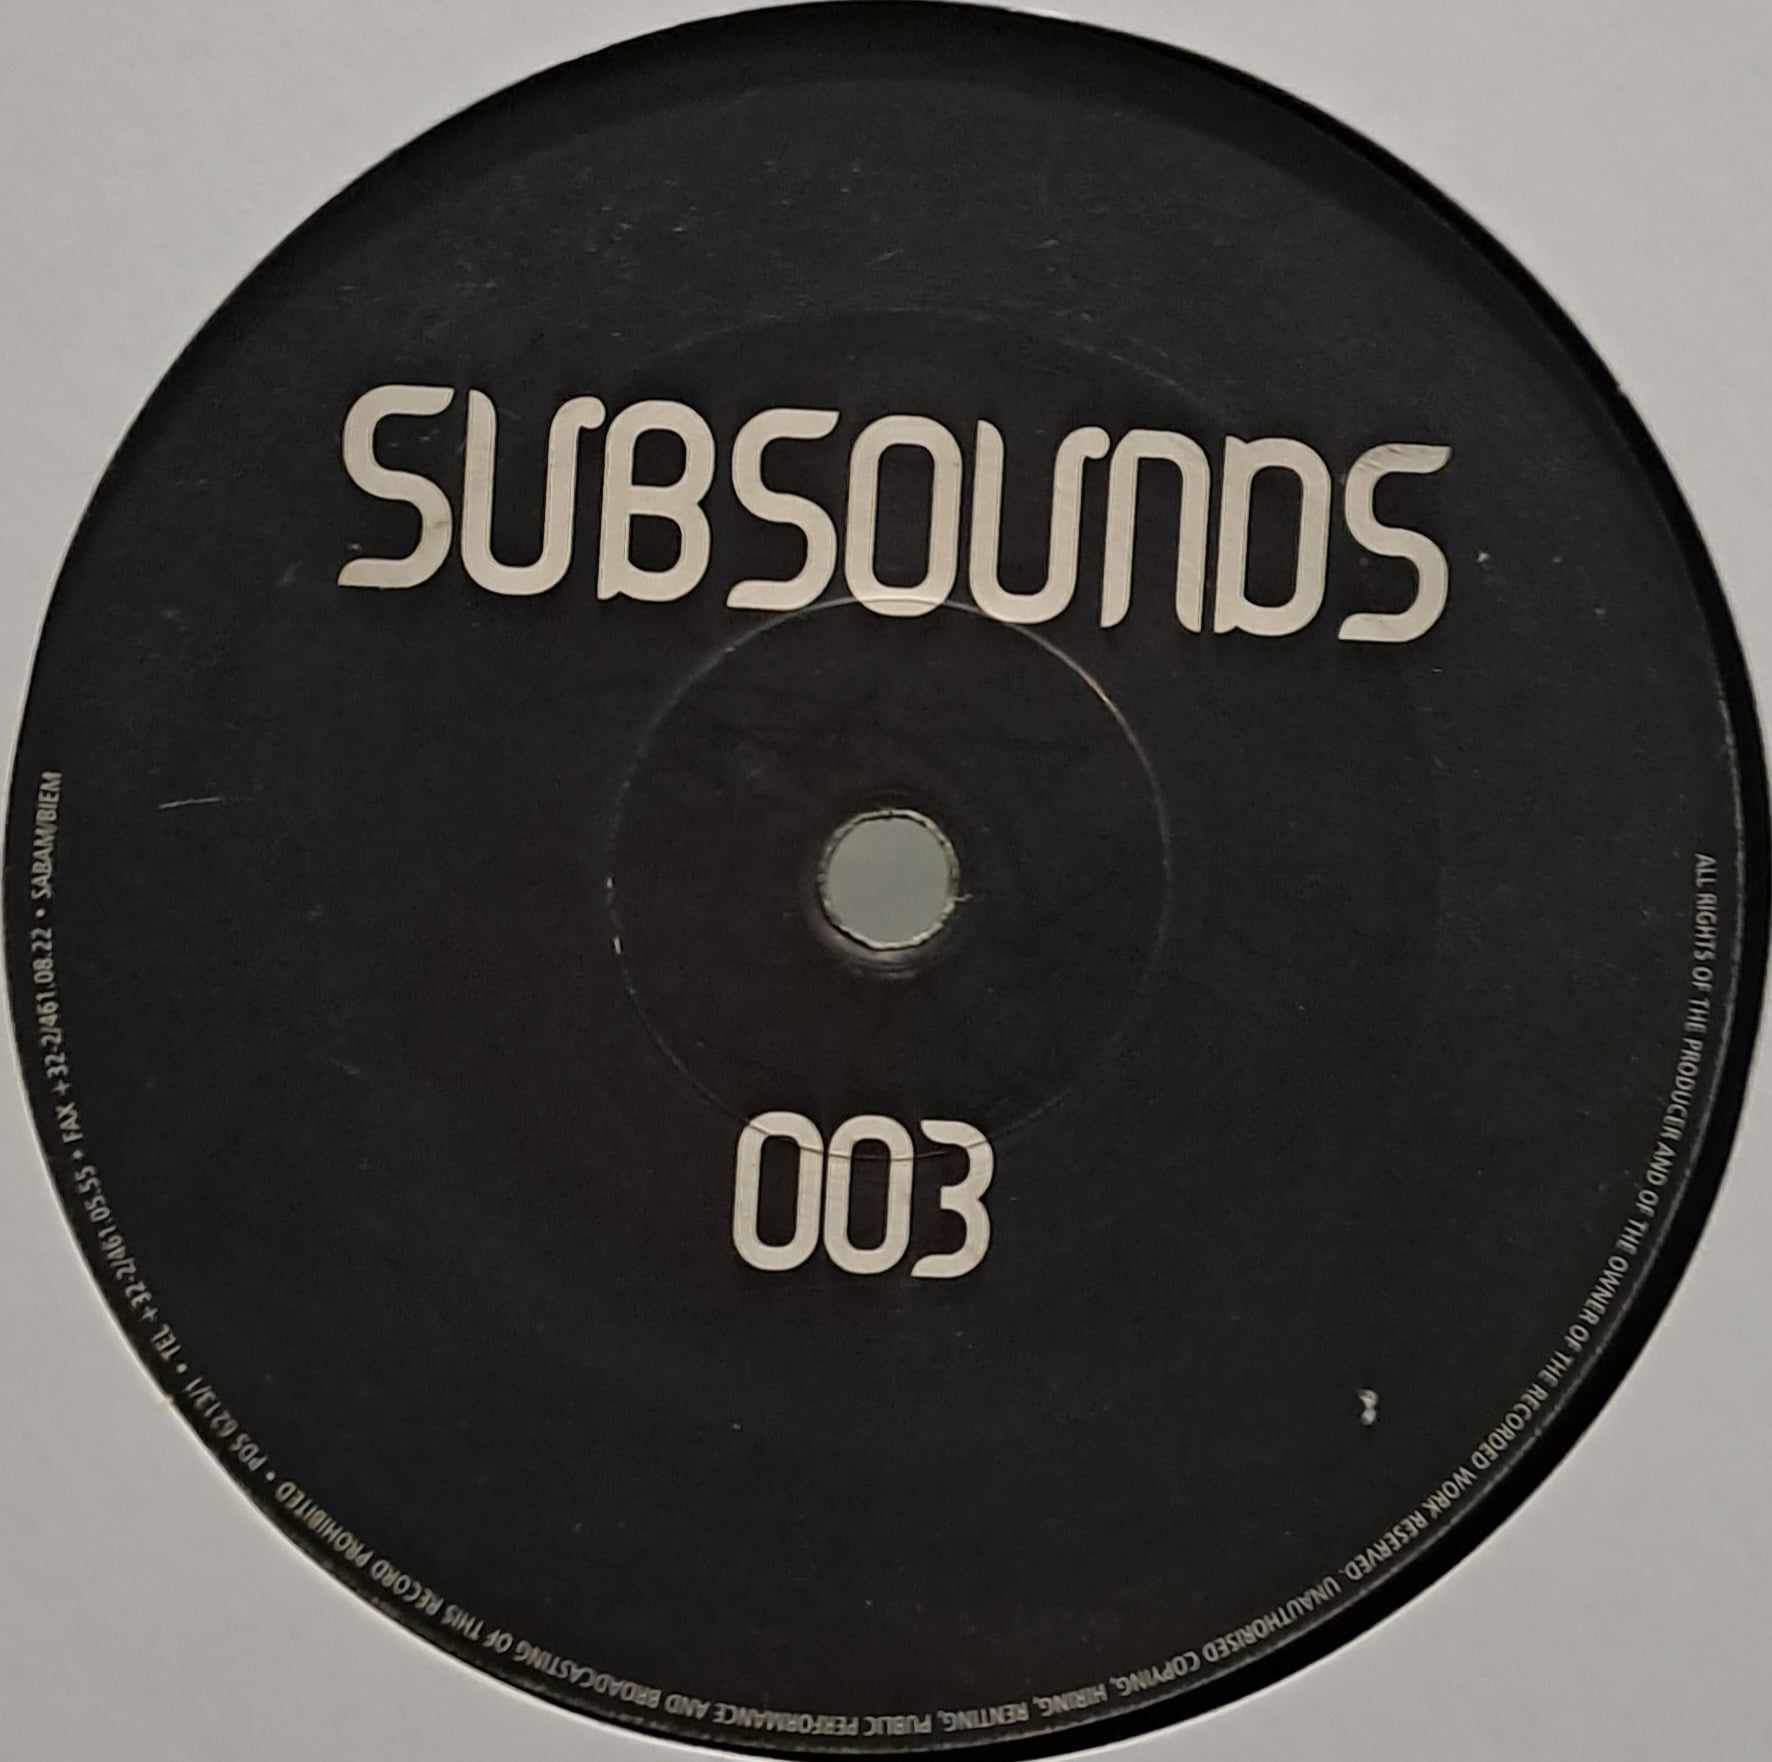 Subsounds 03 - vinyle acid